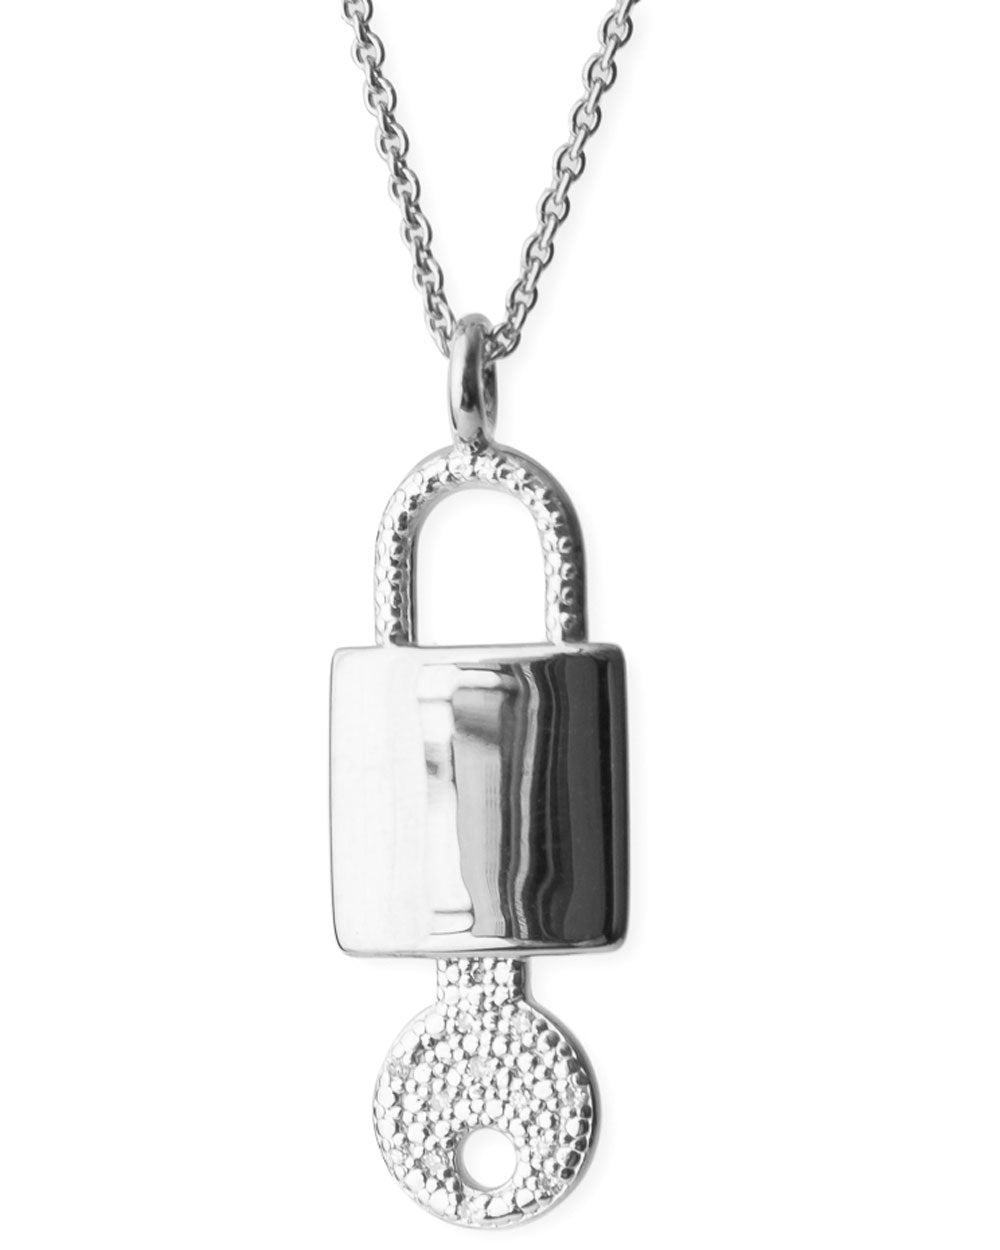 Lock Key Necklace / Sterling Silver Key Lock Necklace / Key to 